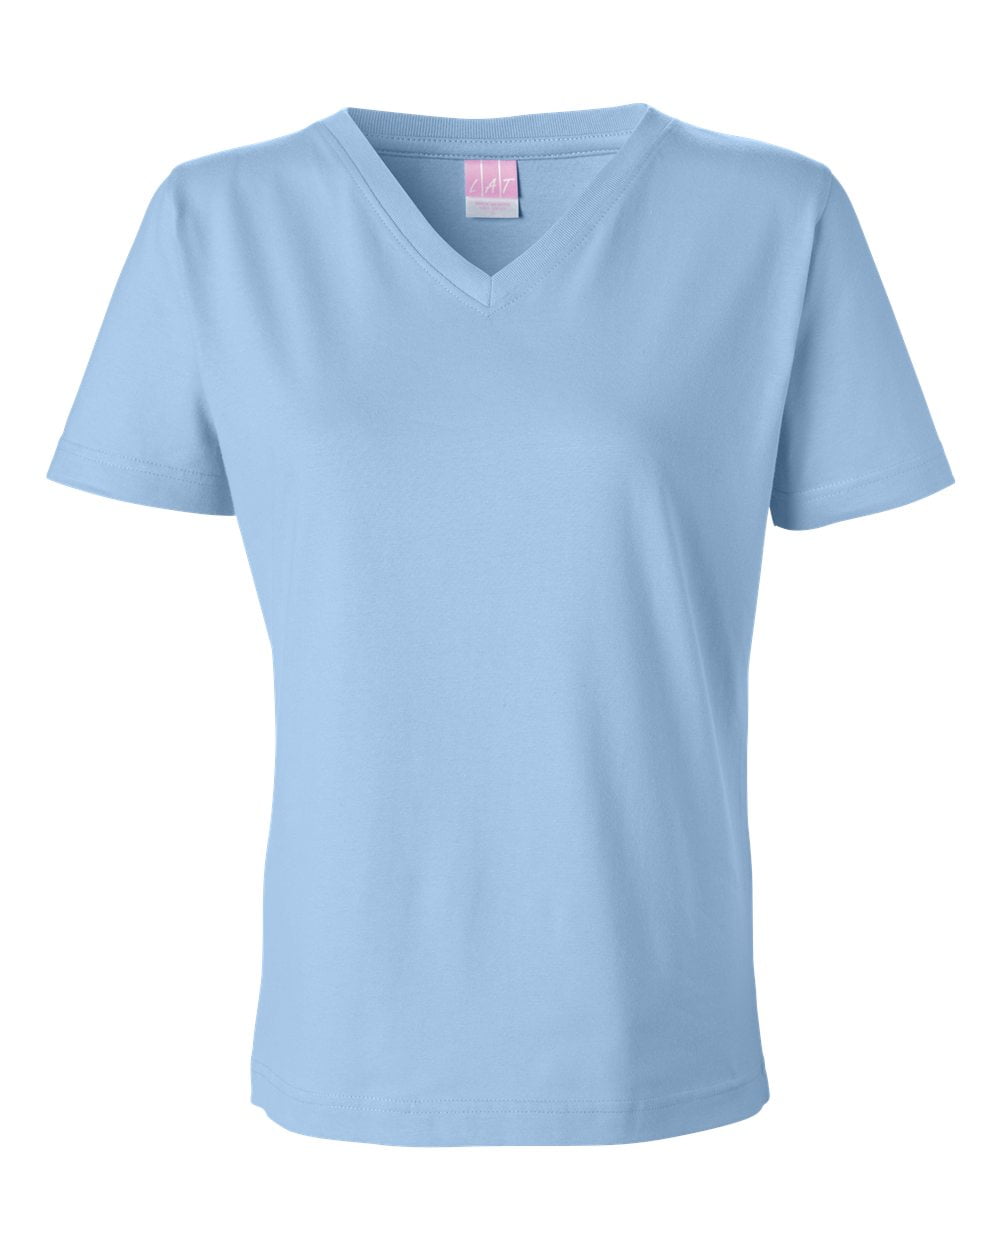 Ladies' Premium Jersey V-Neck T-Shirt LIGHT BLUE 3XL - Walmart.com